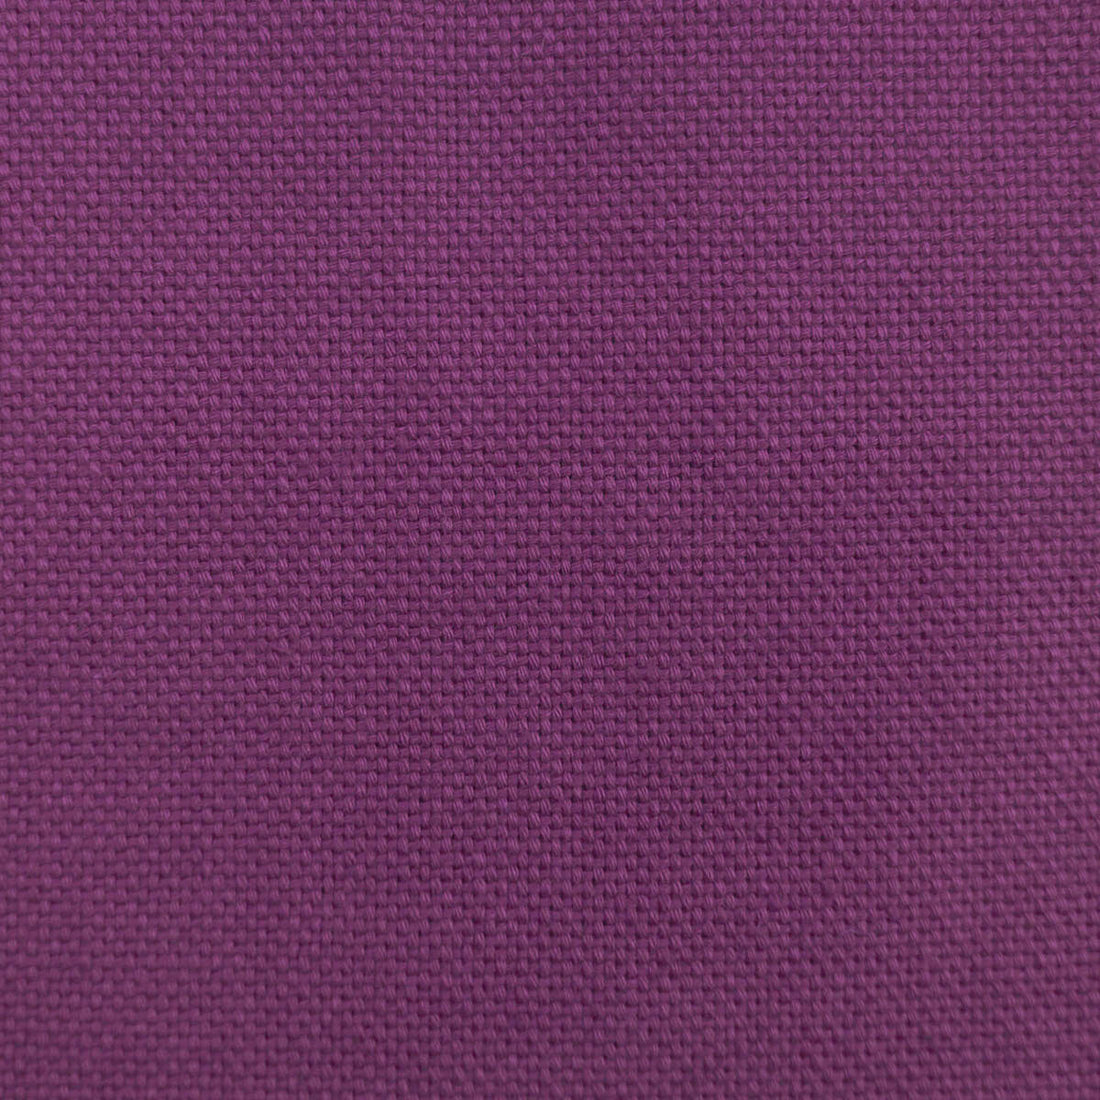 Dobra fabric in morado color - pattern LCT1075.035.0 - by Gaston y Daniela in the Lorenzo Castillo VII The Rectory collection